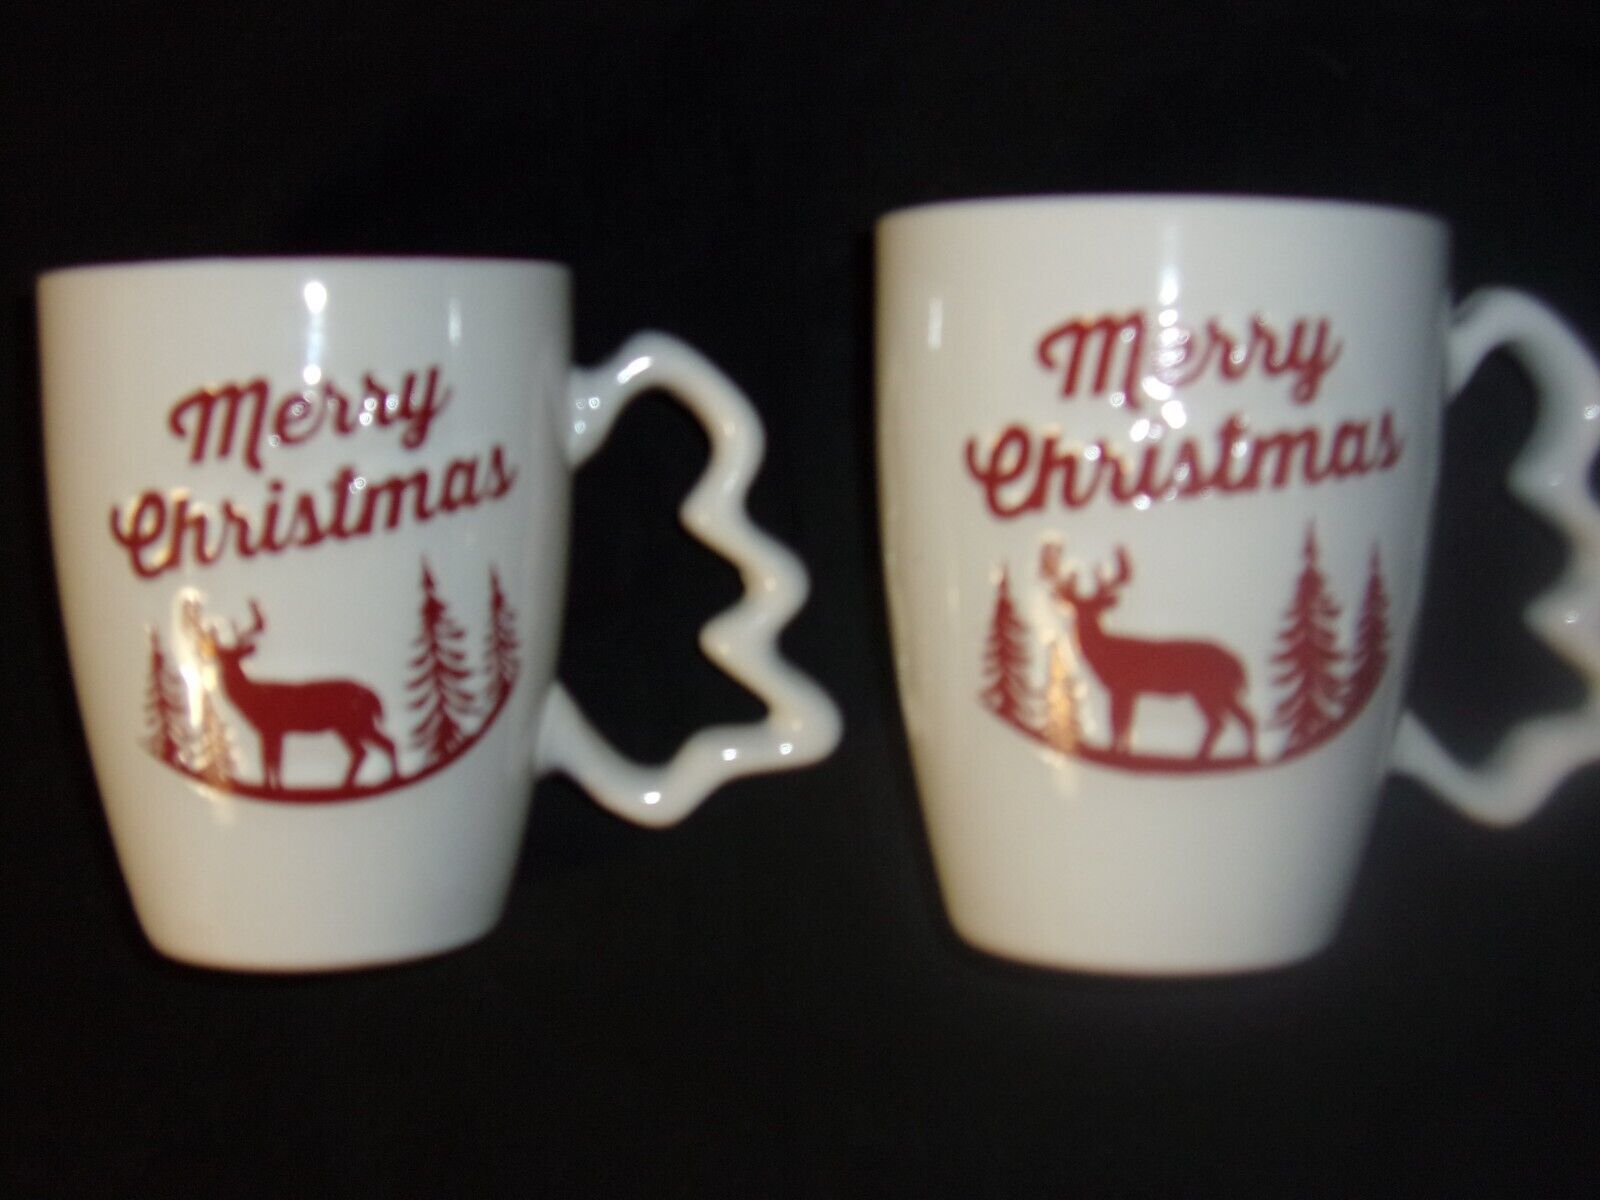 California Pantry "Merry Christmas" Coffee Cups/Mugs 11 fl oz Set of 2 New - $12.99